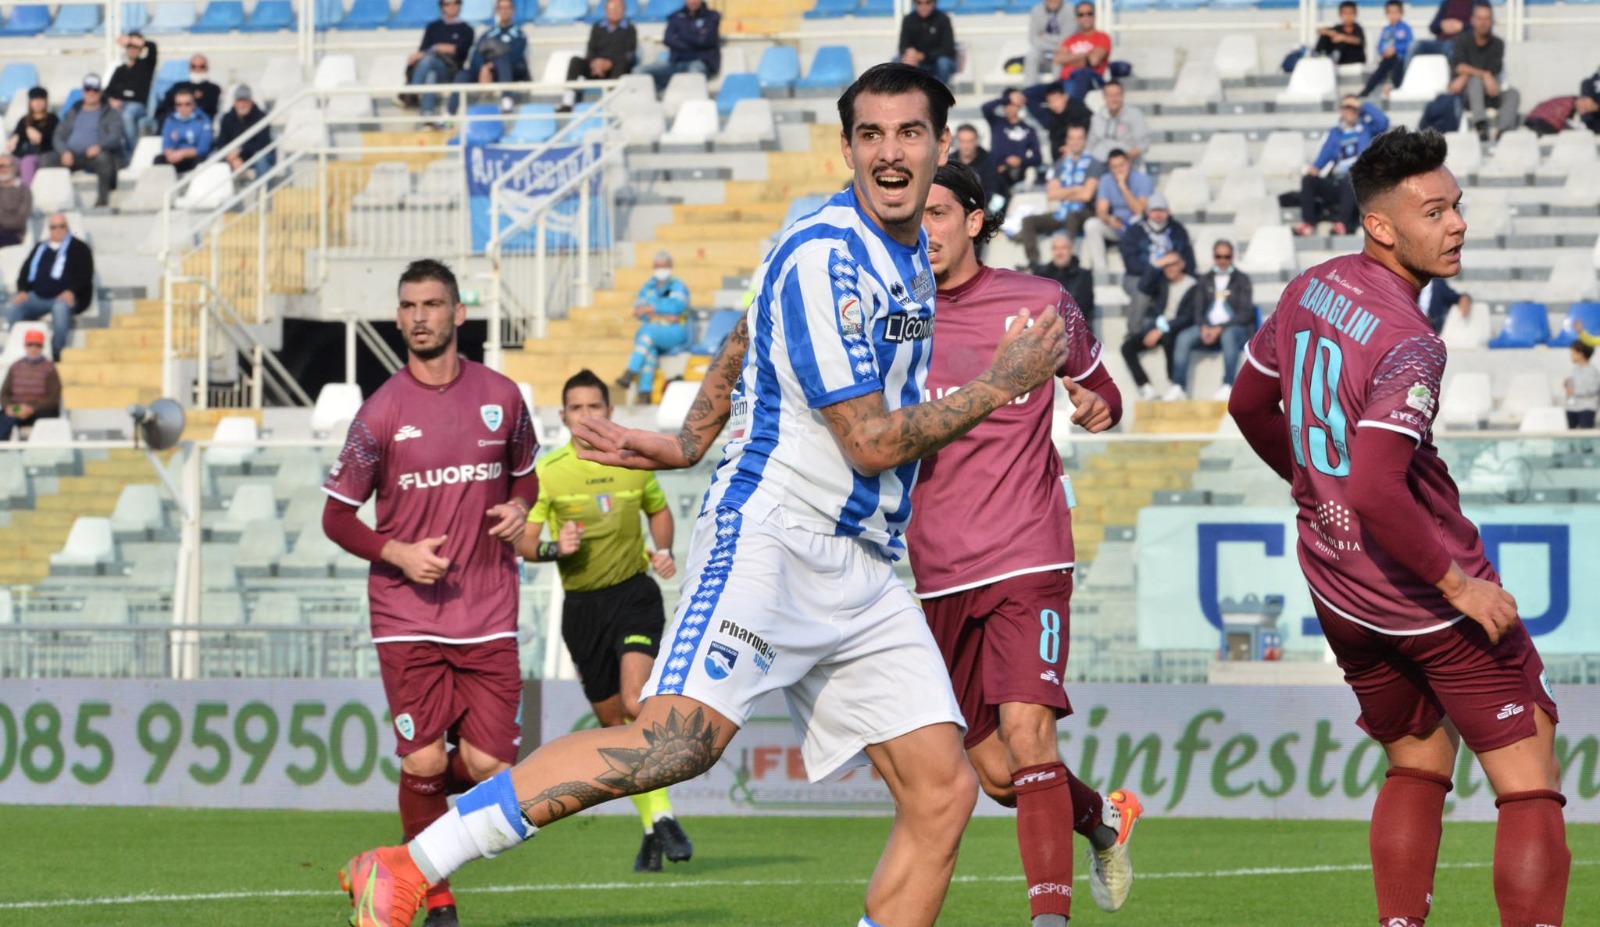 Pescara-Olbia 1-0: Auteri salva la panchina